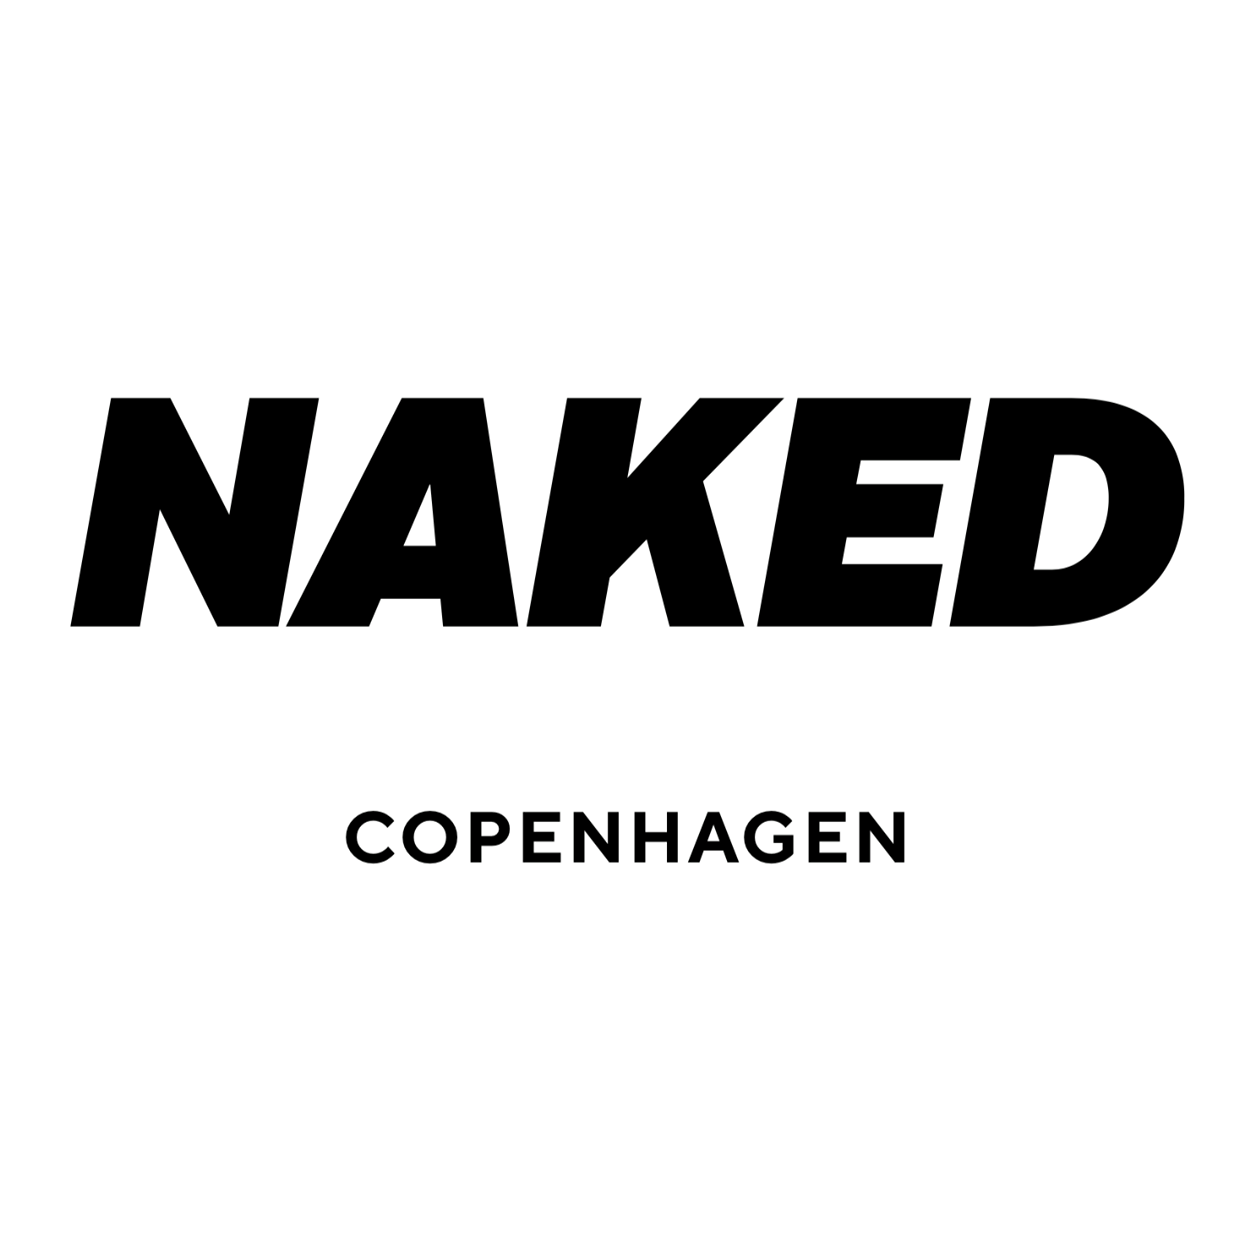 Beżowy buty do biegania NAKED Copenhagen